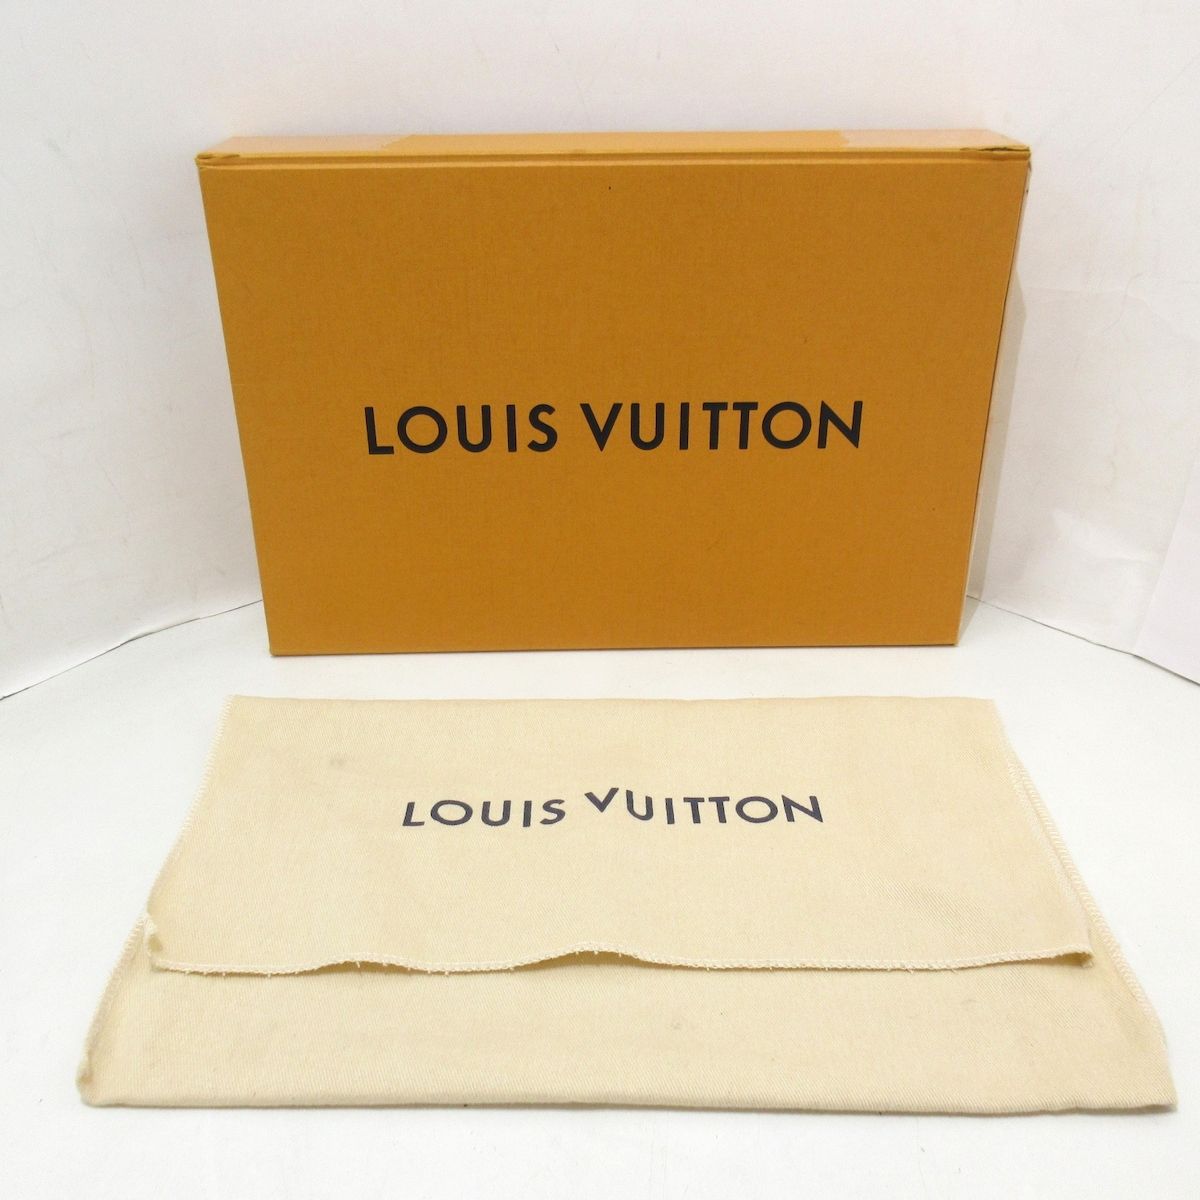 LOUIS VUITTON(ルイヴィトン) クラッチバッグ キュイールトリヨン美品